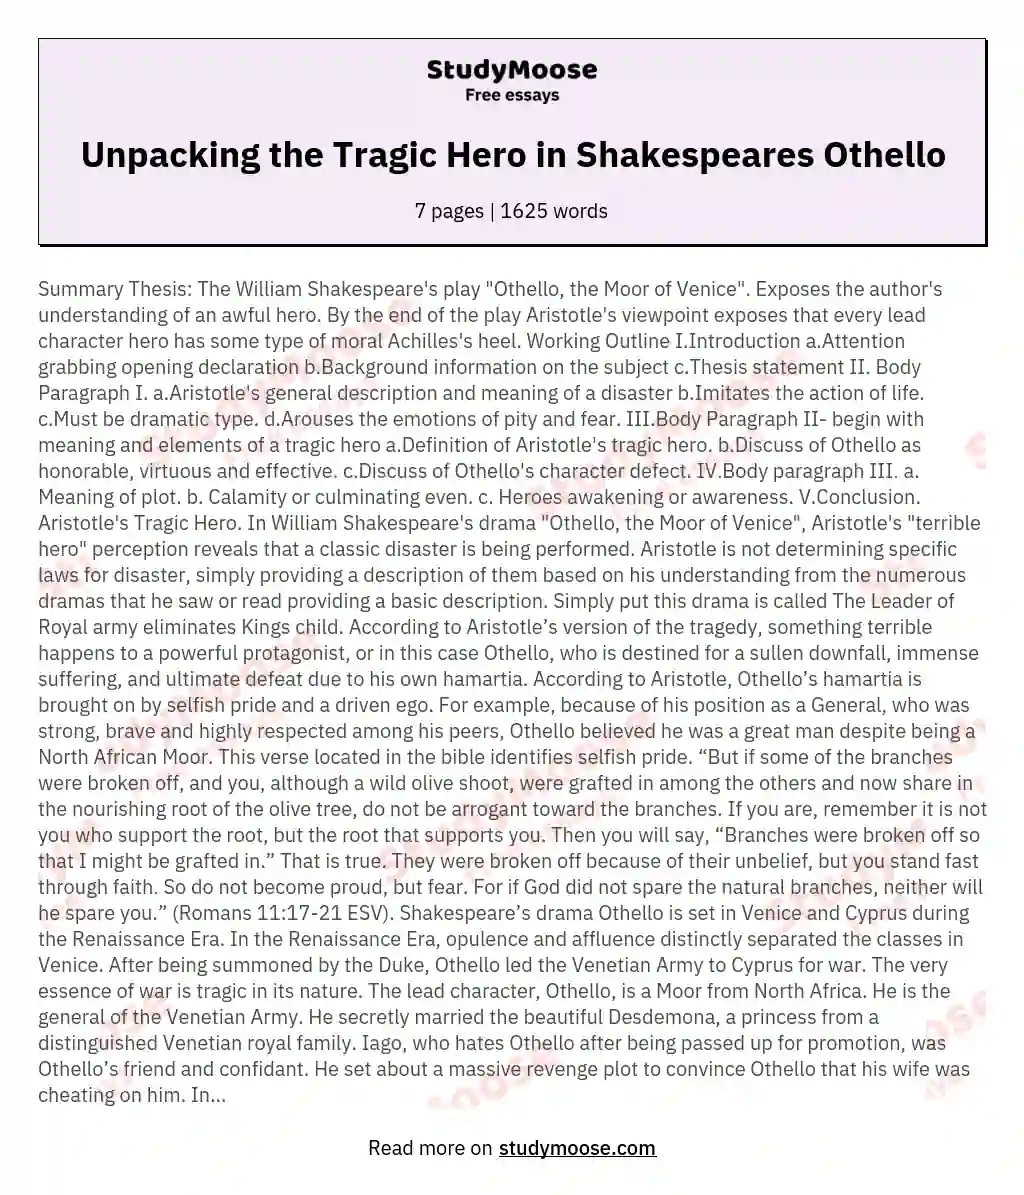 Unpacking the Tragic Hero in Shakespeares Othello essay